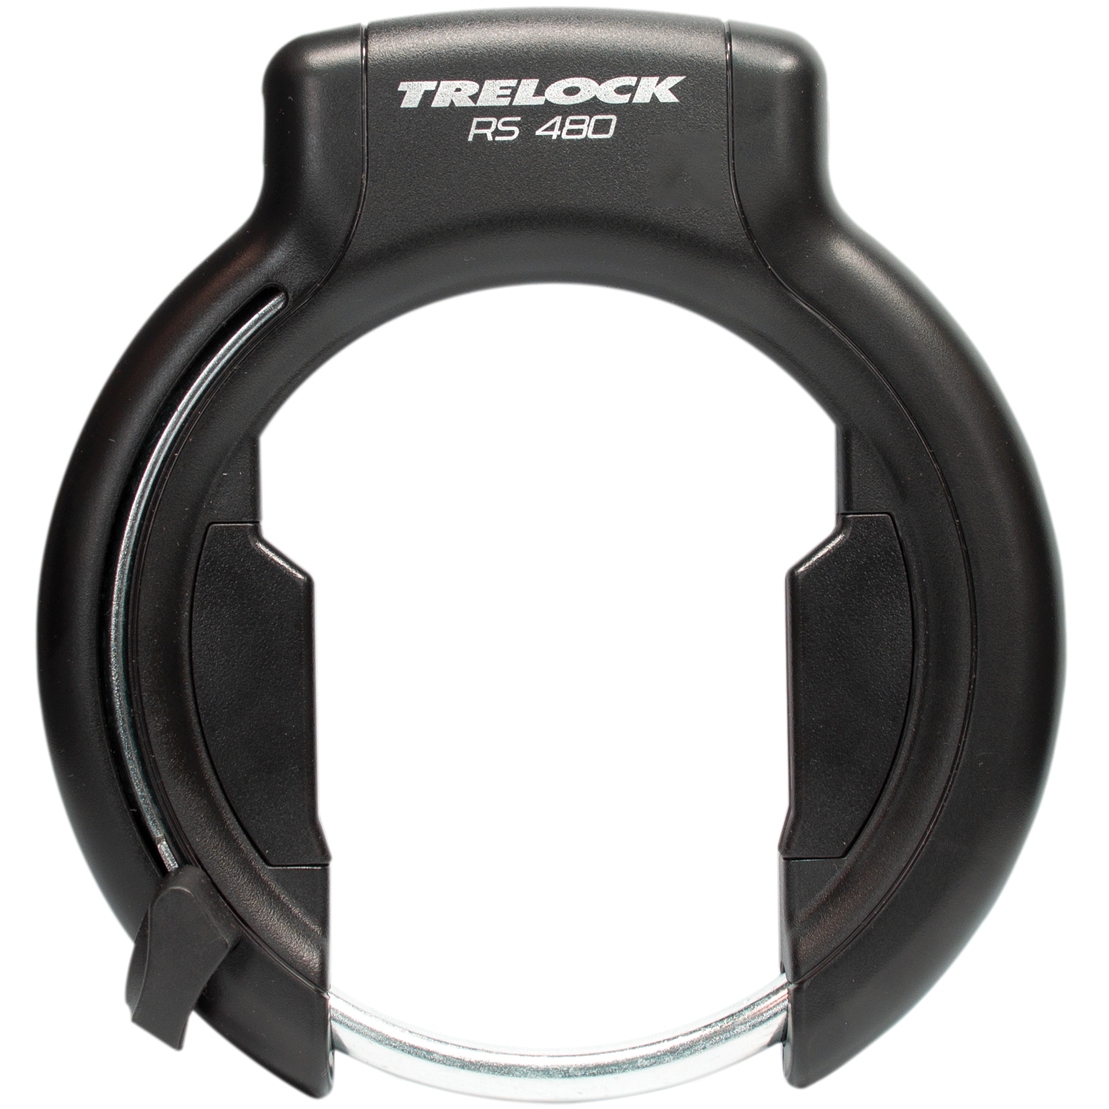 Productfoto van Trelock RS 480 P-O-C XL AZ Frame Lock